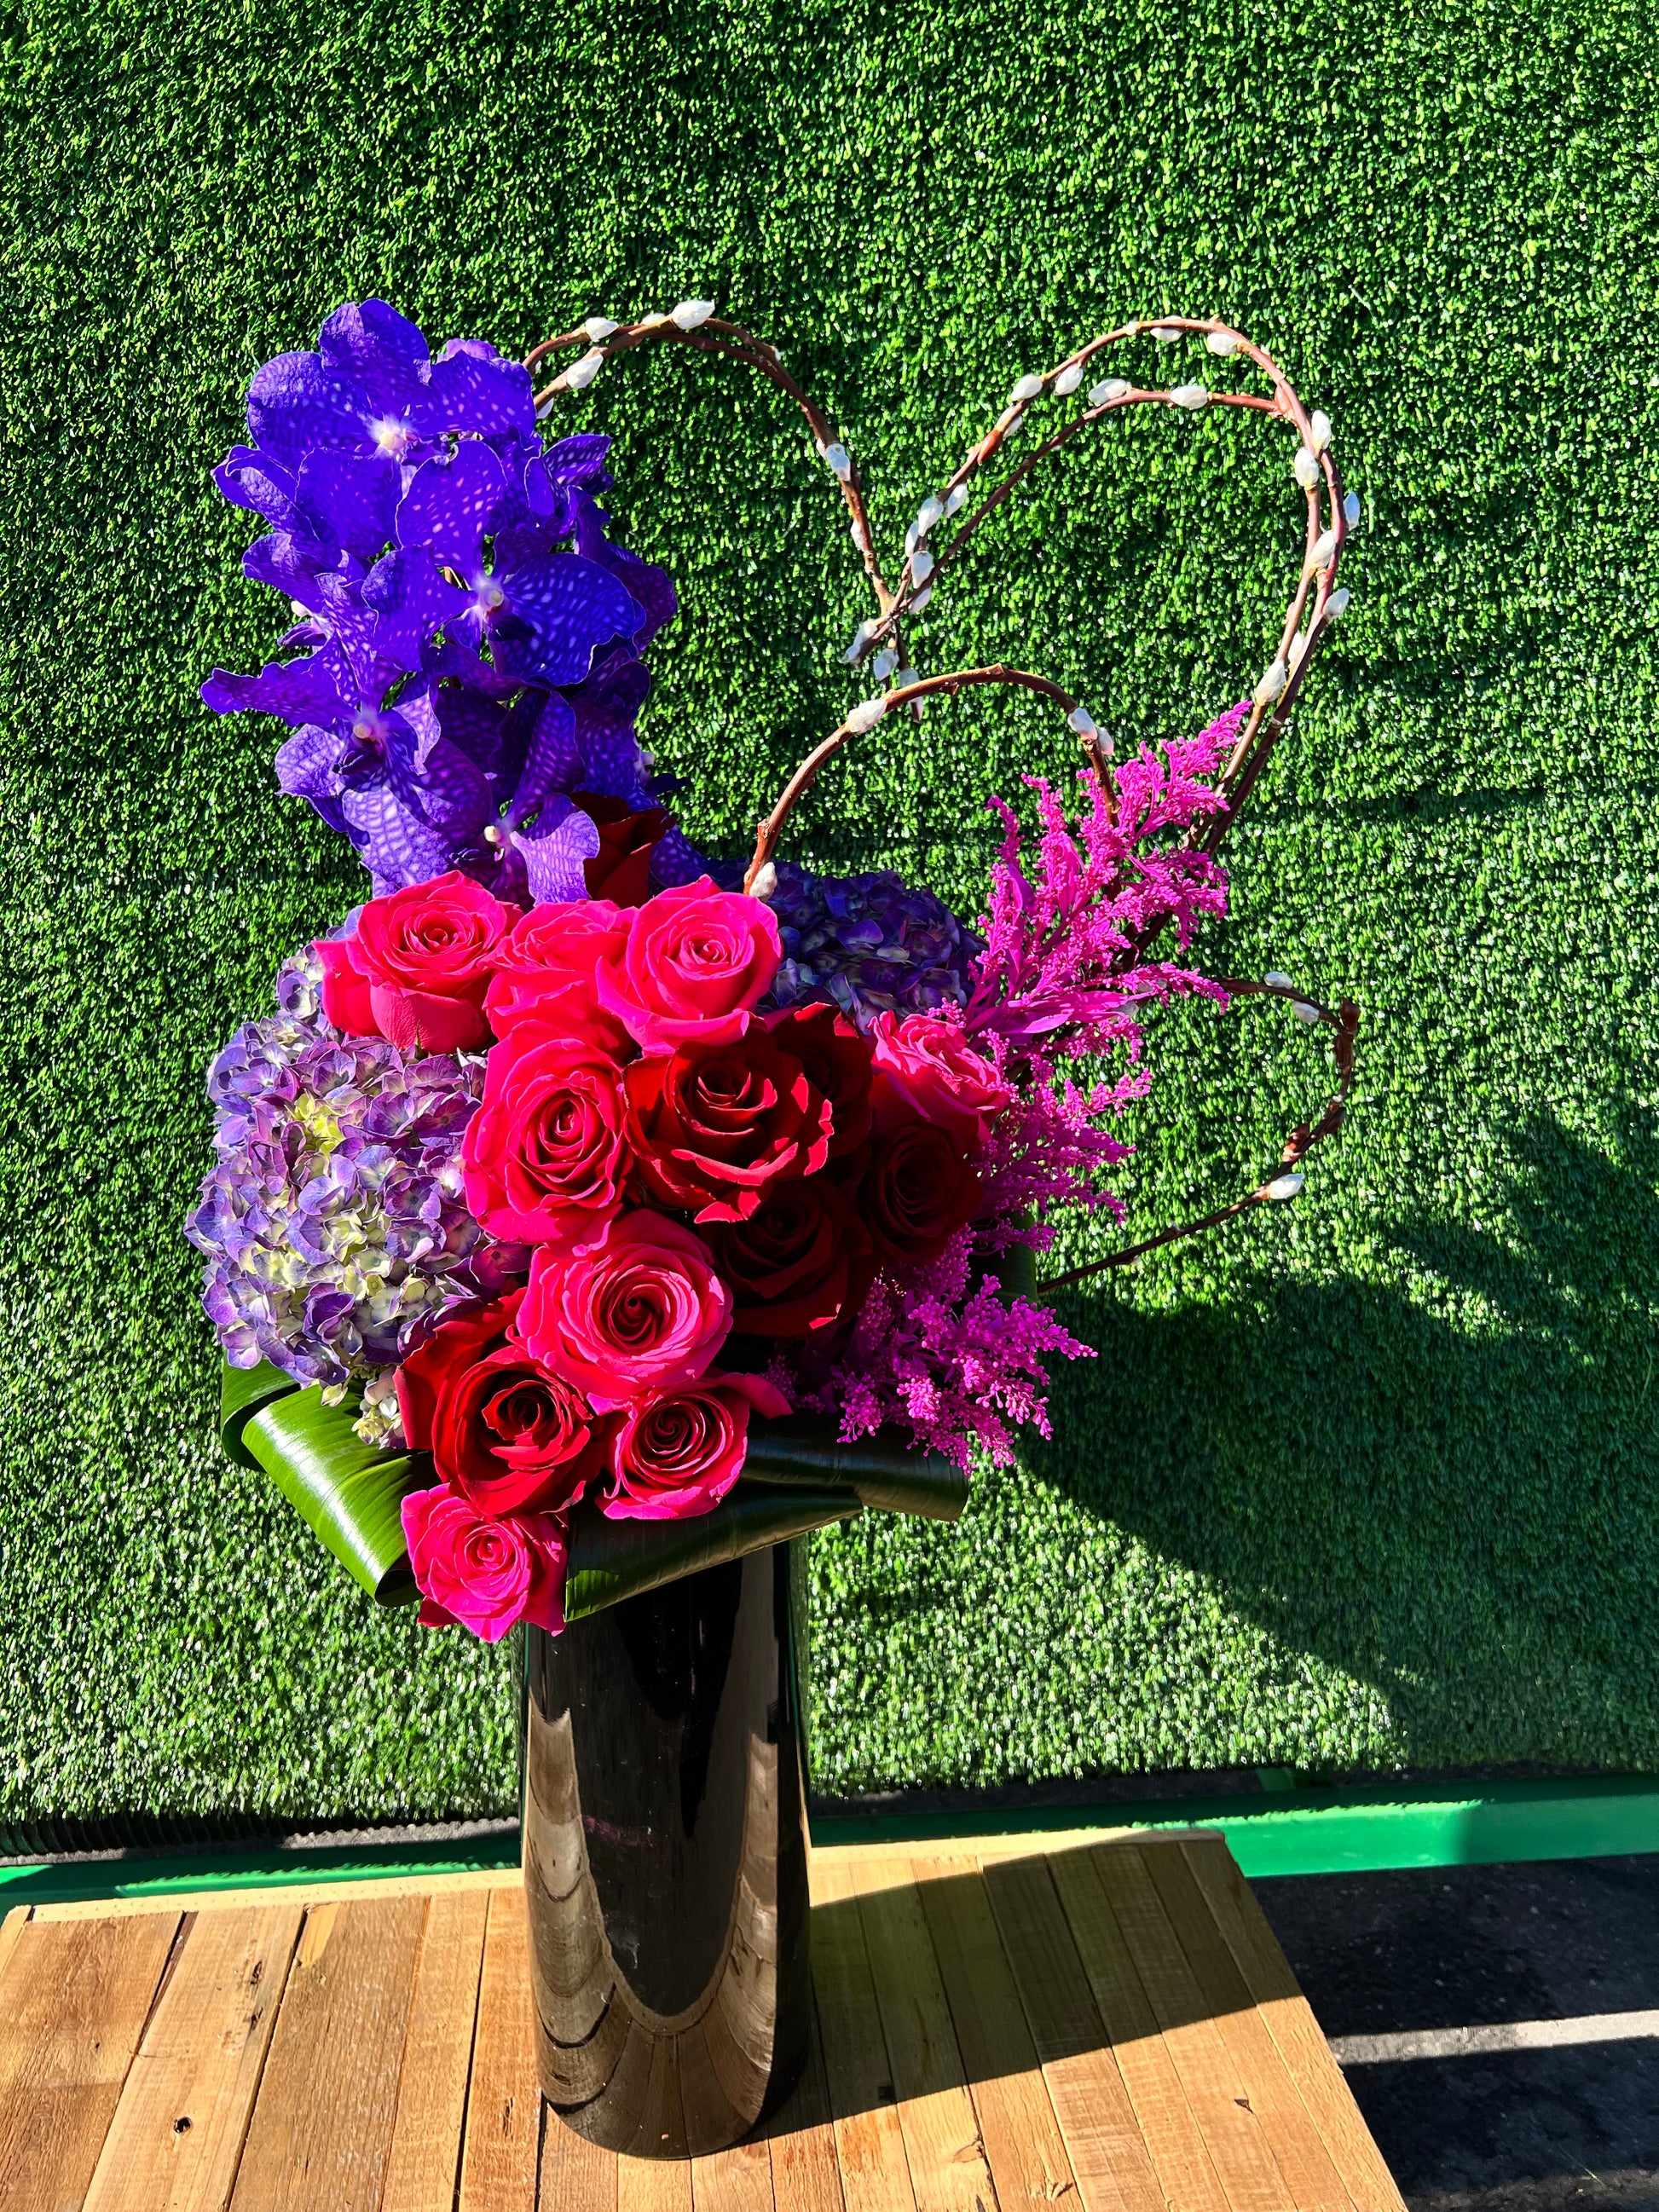 My Everything-Heartfelt bouquet symbolizing comprehensive love on anniversaries